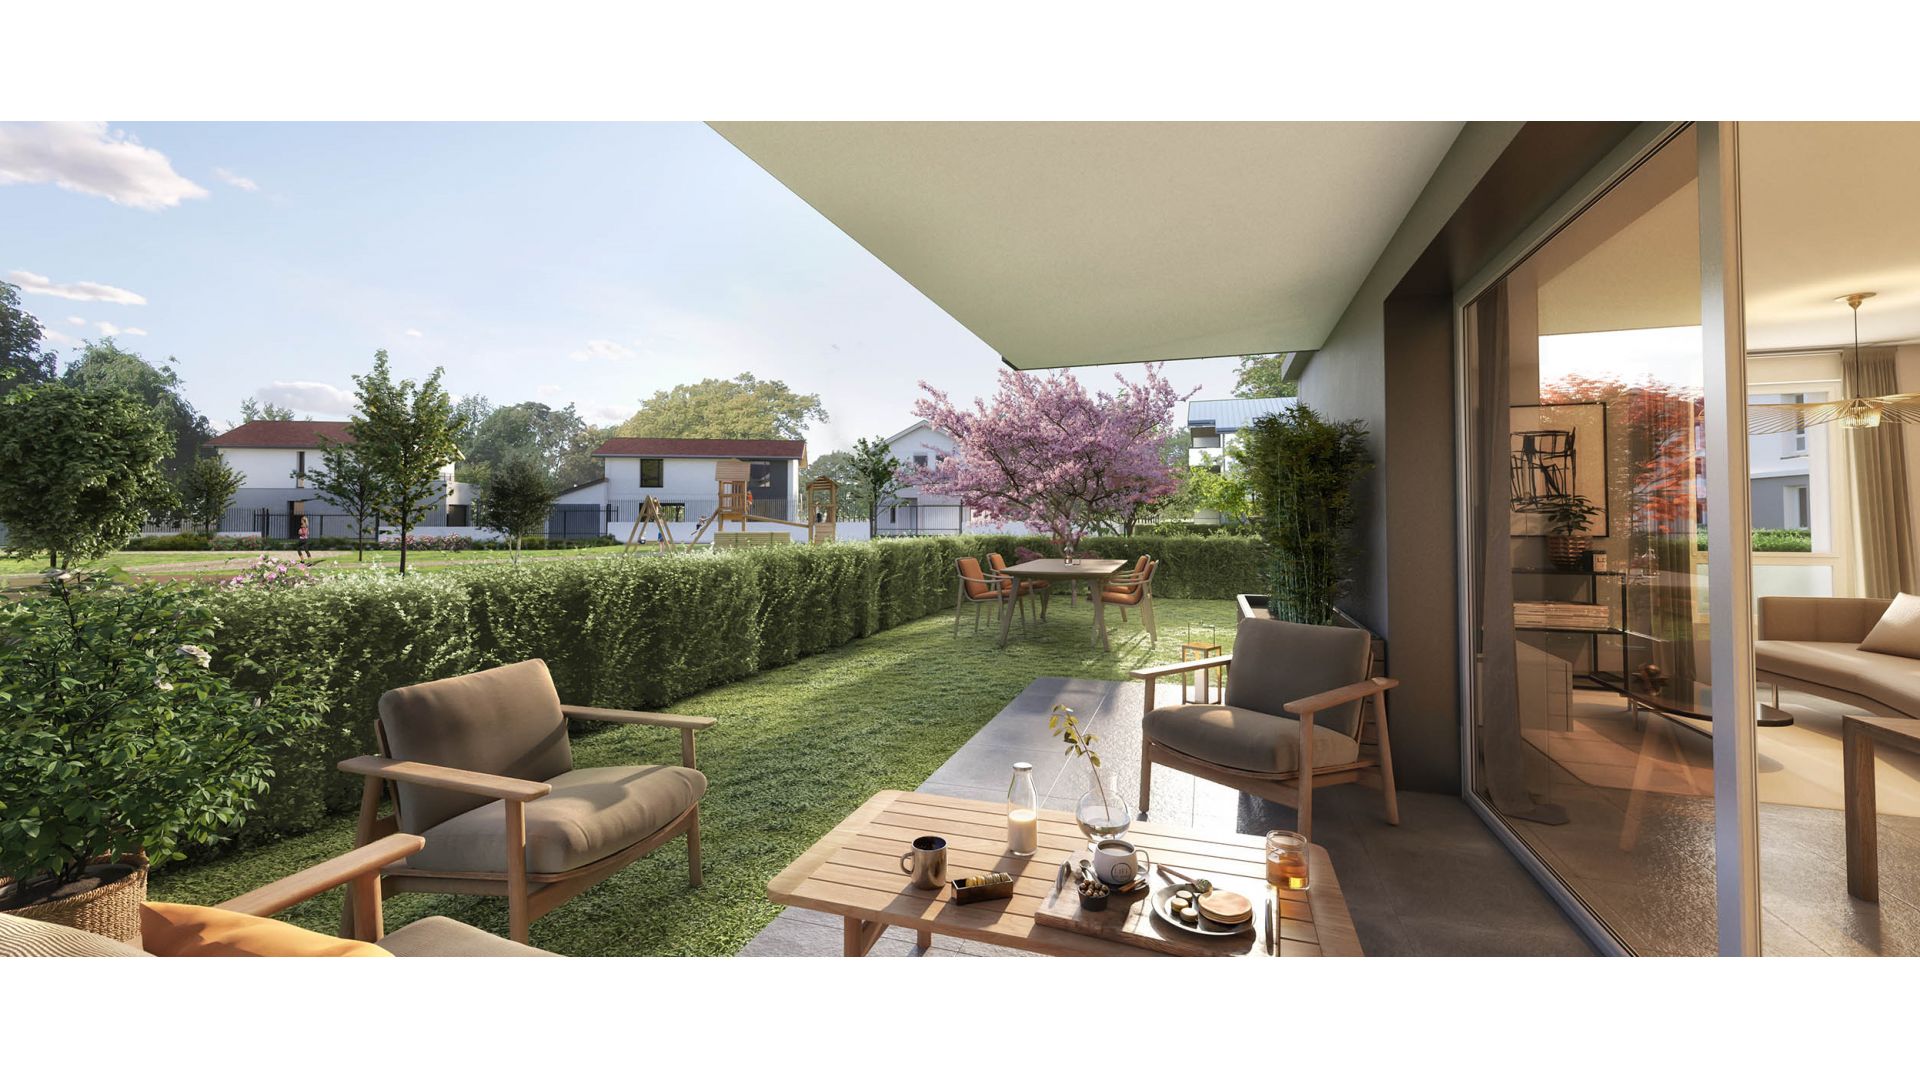 Greencity immobilier - achat appartements neufs du T2 au T3 - Résidence Green Cottage  - 74950 Scionzier